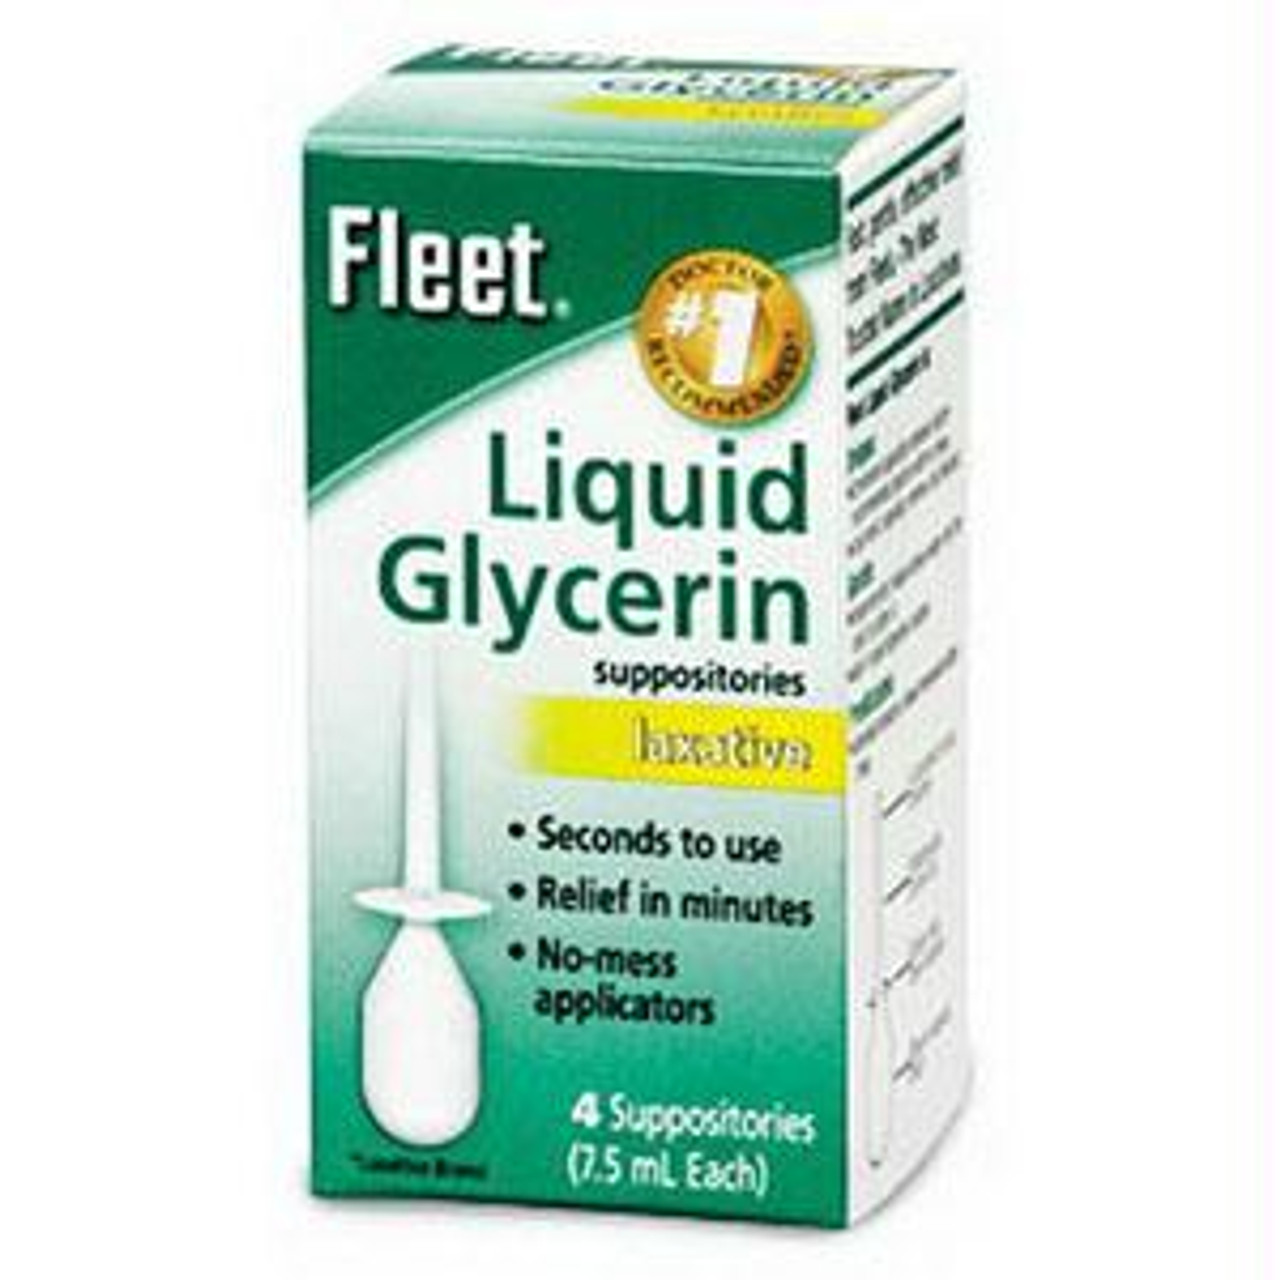 Fleet Laxative Glycerin Suppositories